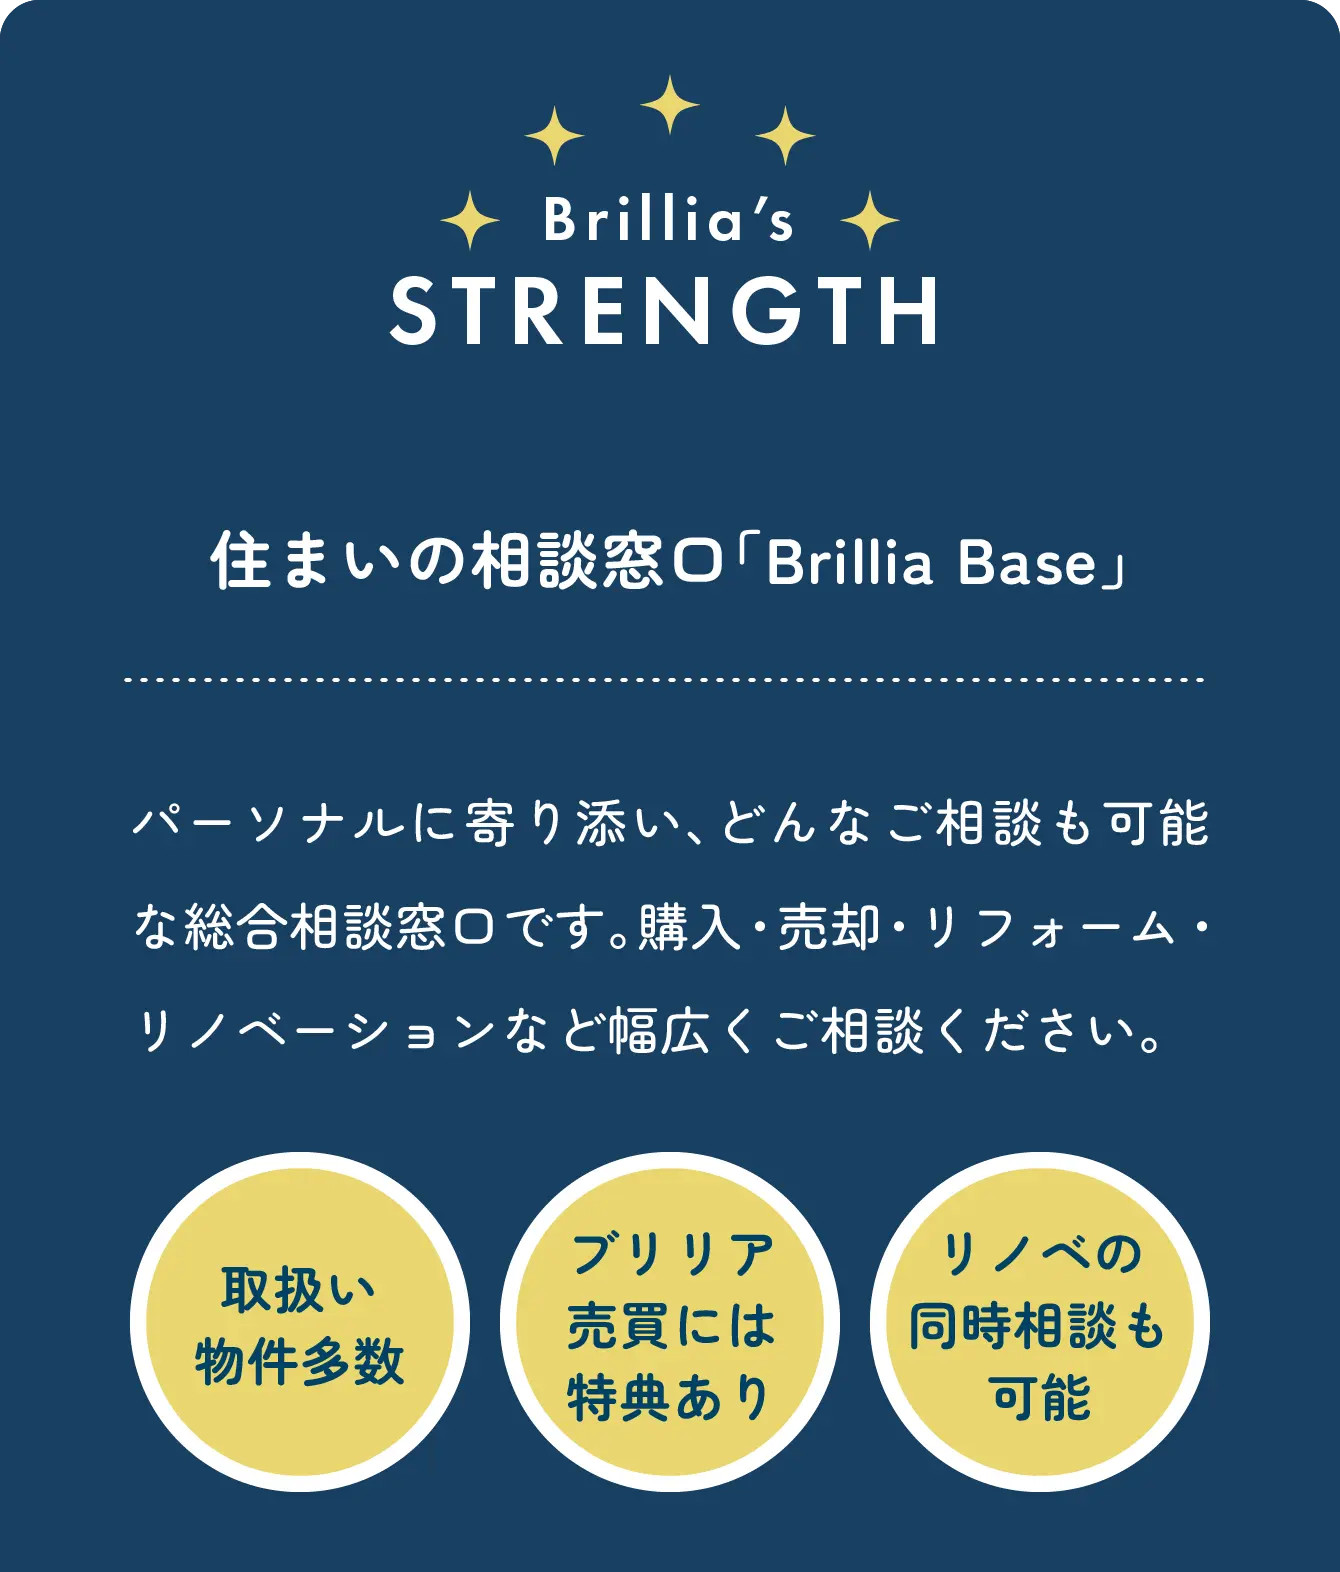 Brillia's strength 住まいの相談窓口Brillia Base